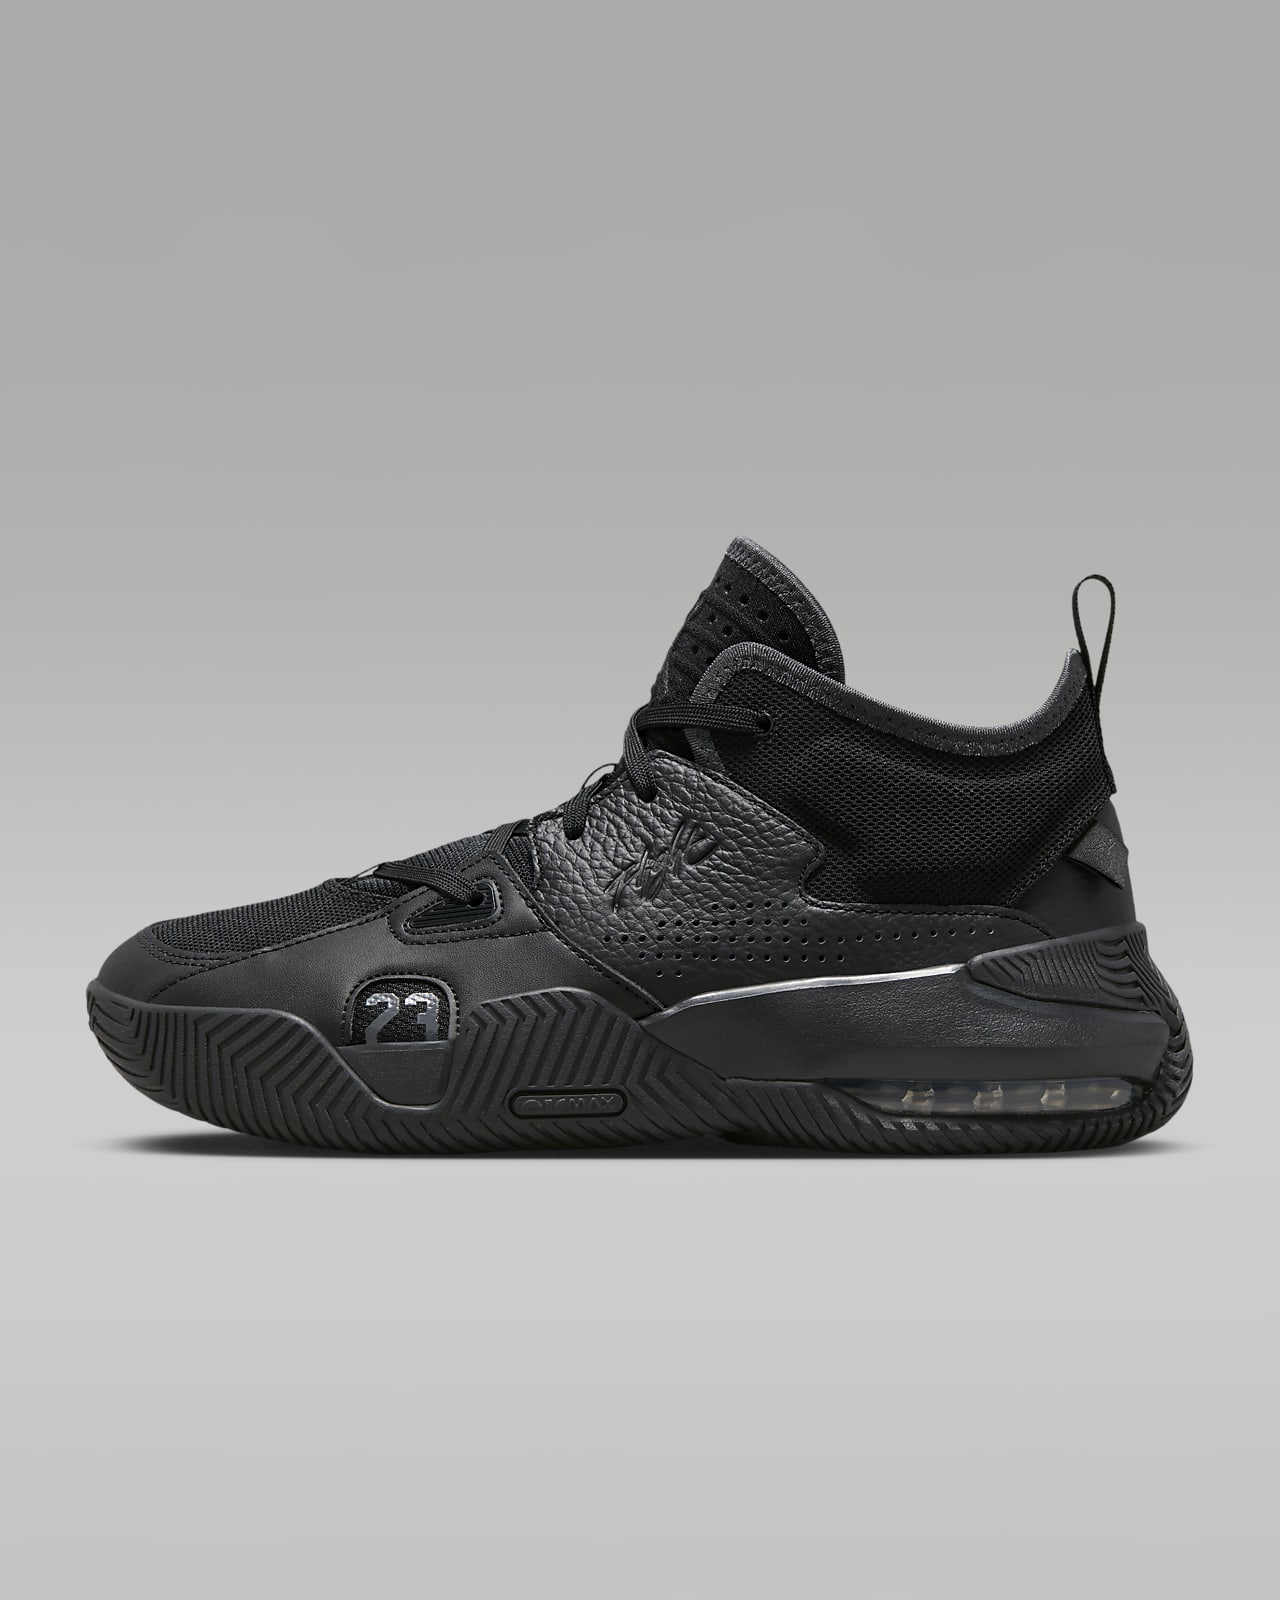 Black Jordans  Latest All Black Nike Air Jordan Trainers